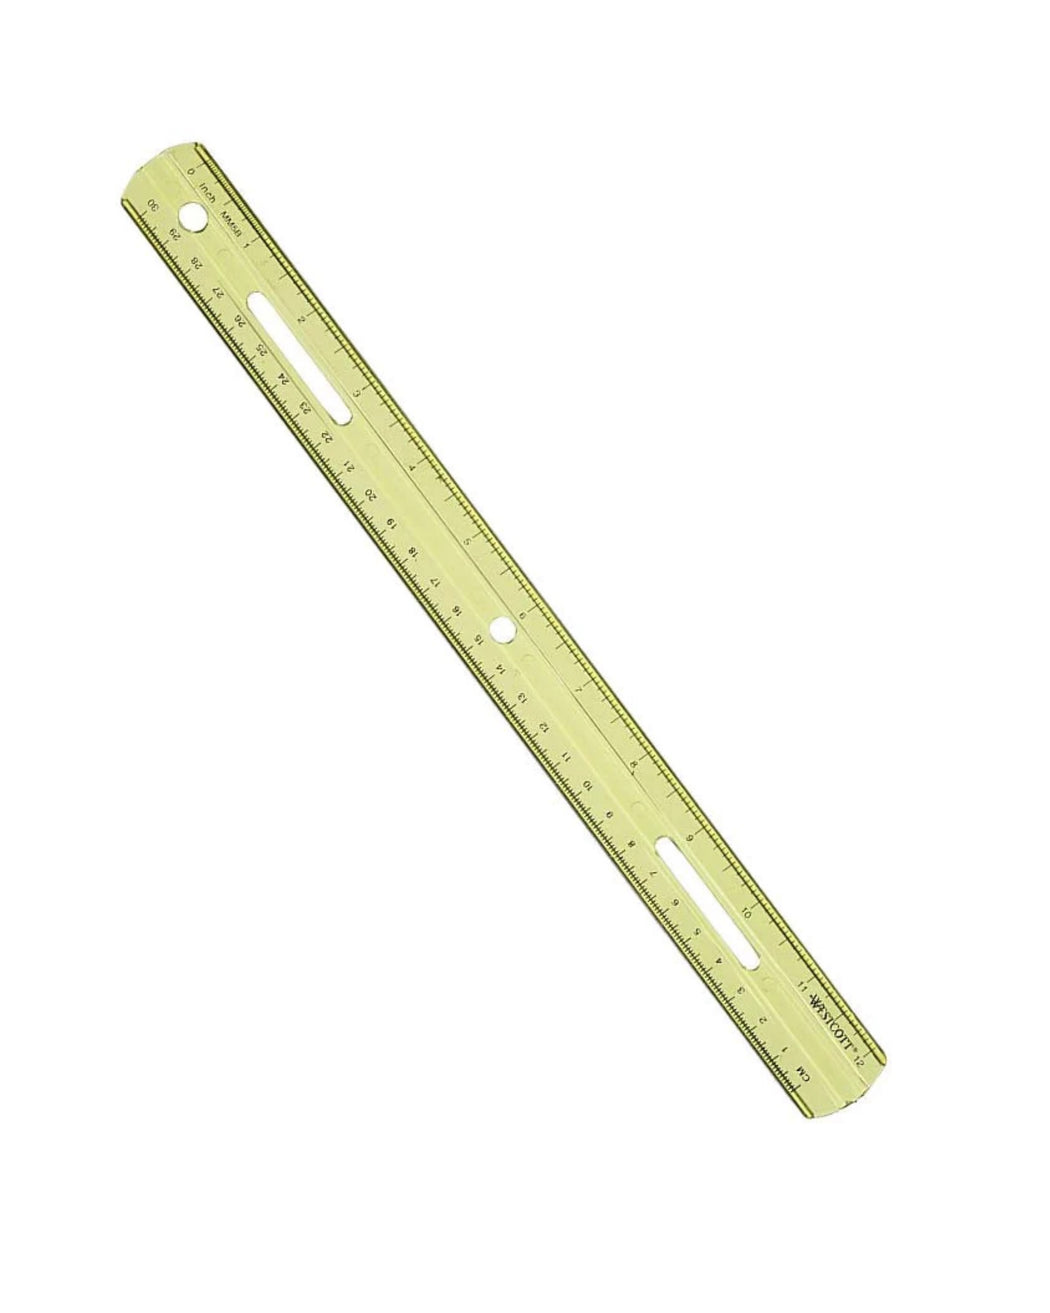 Plastic Ruler, 12" - Zipper and Thread